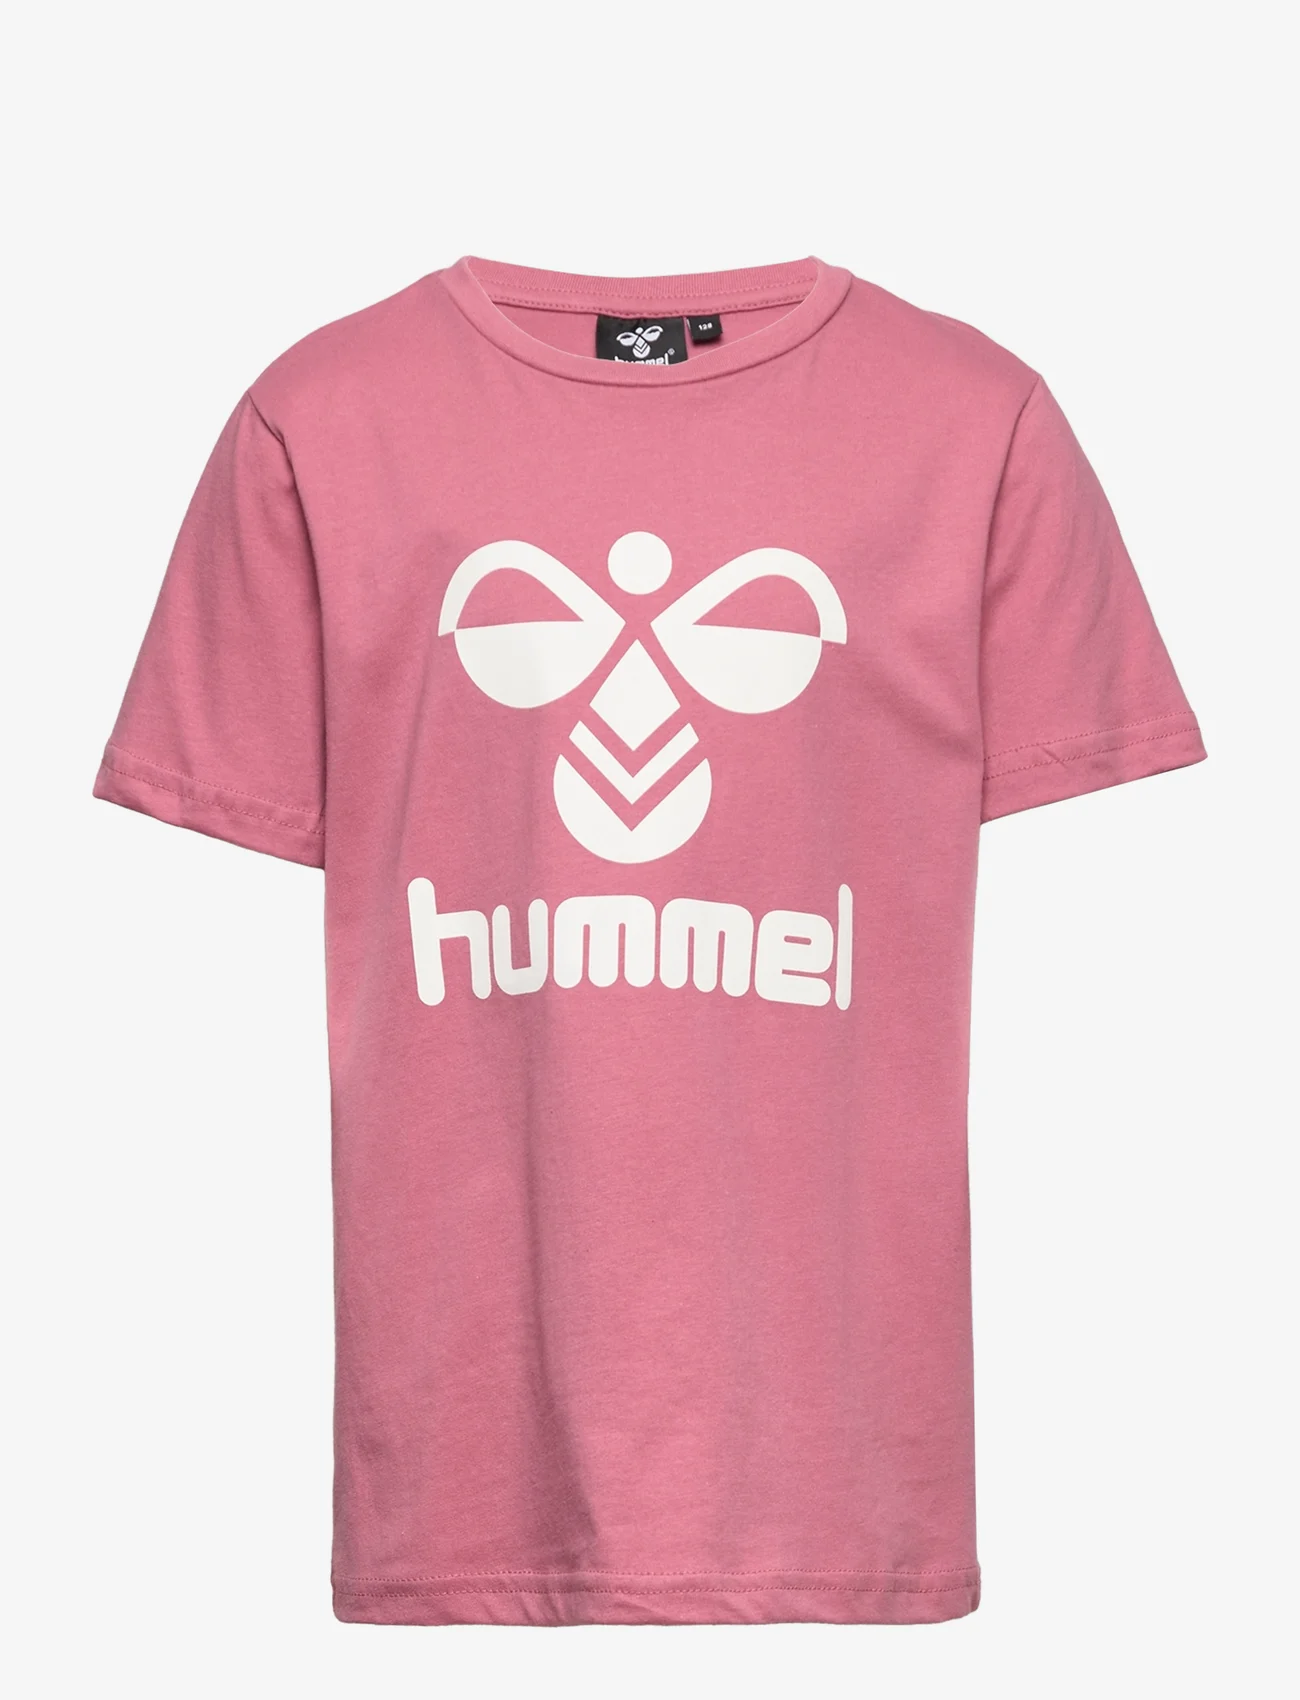 Hummel - hmlTRES T-SHIRT S/S - kortärmade - heather rose - 0